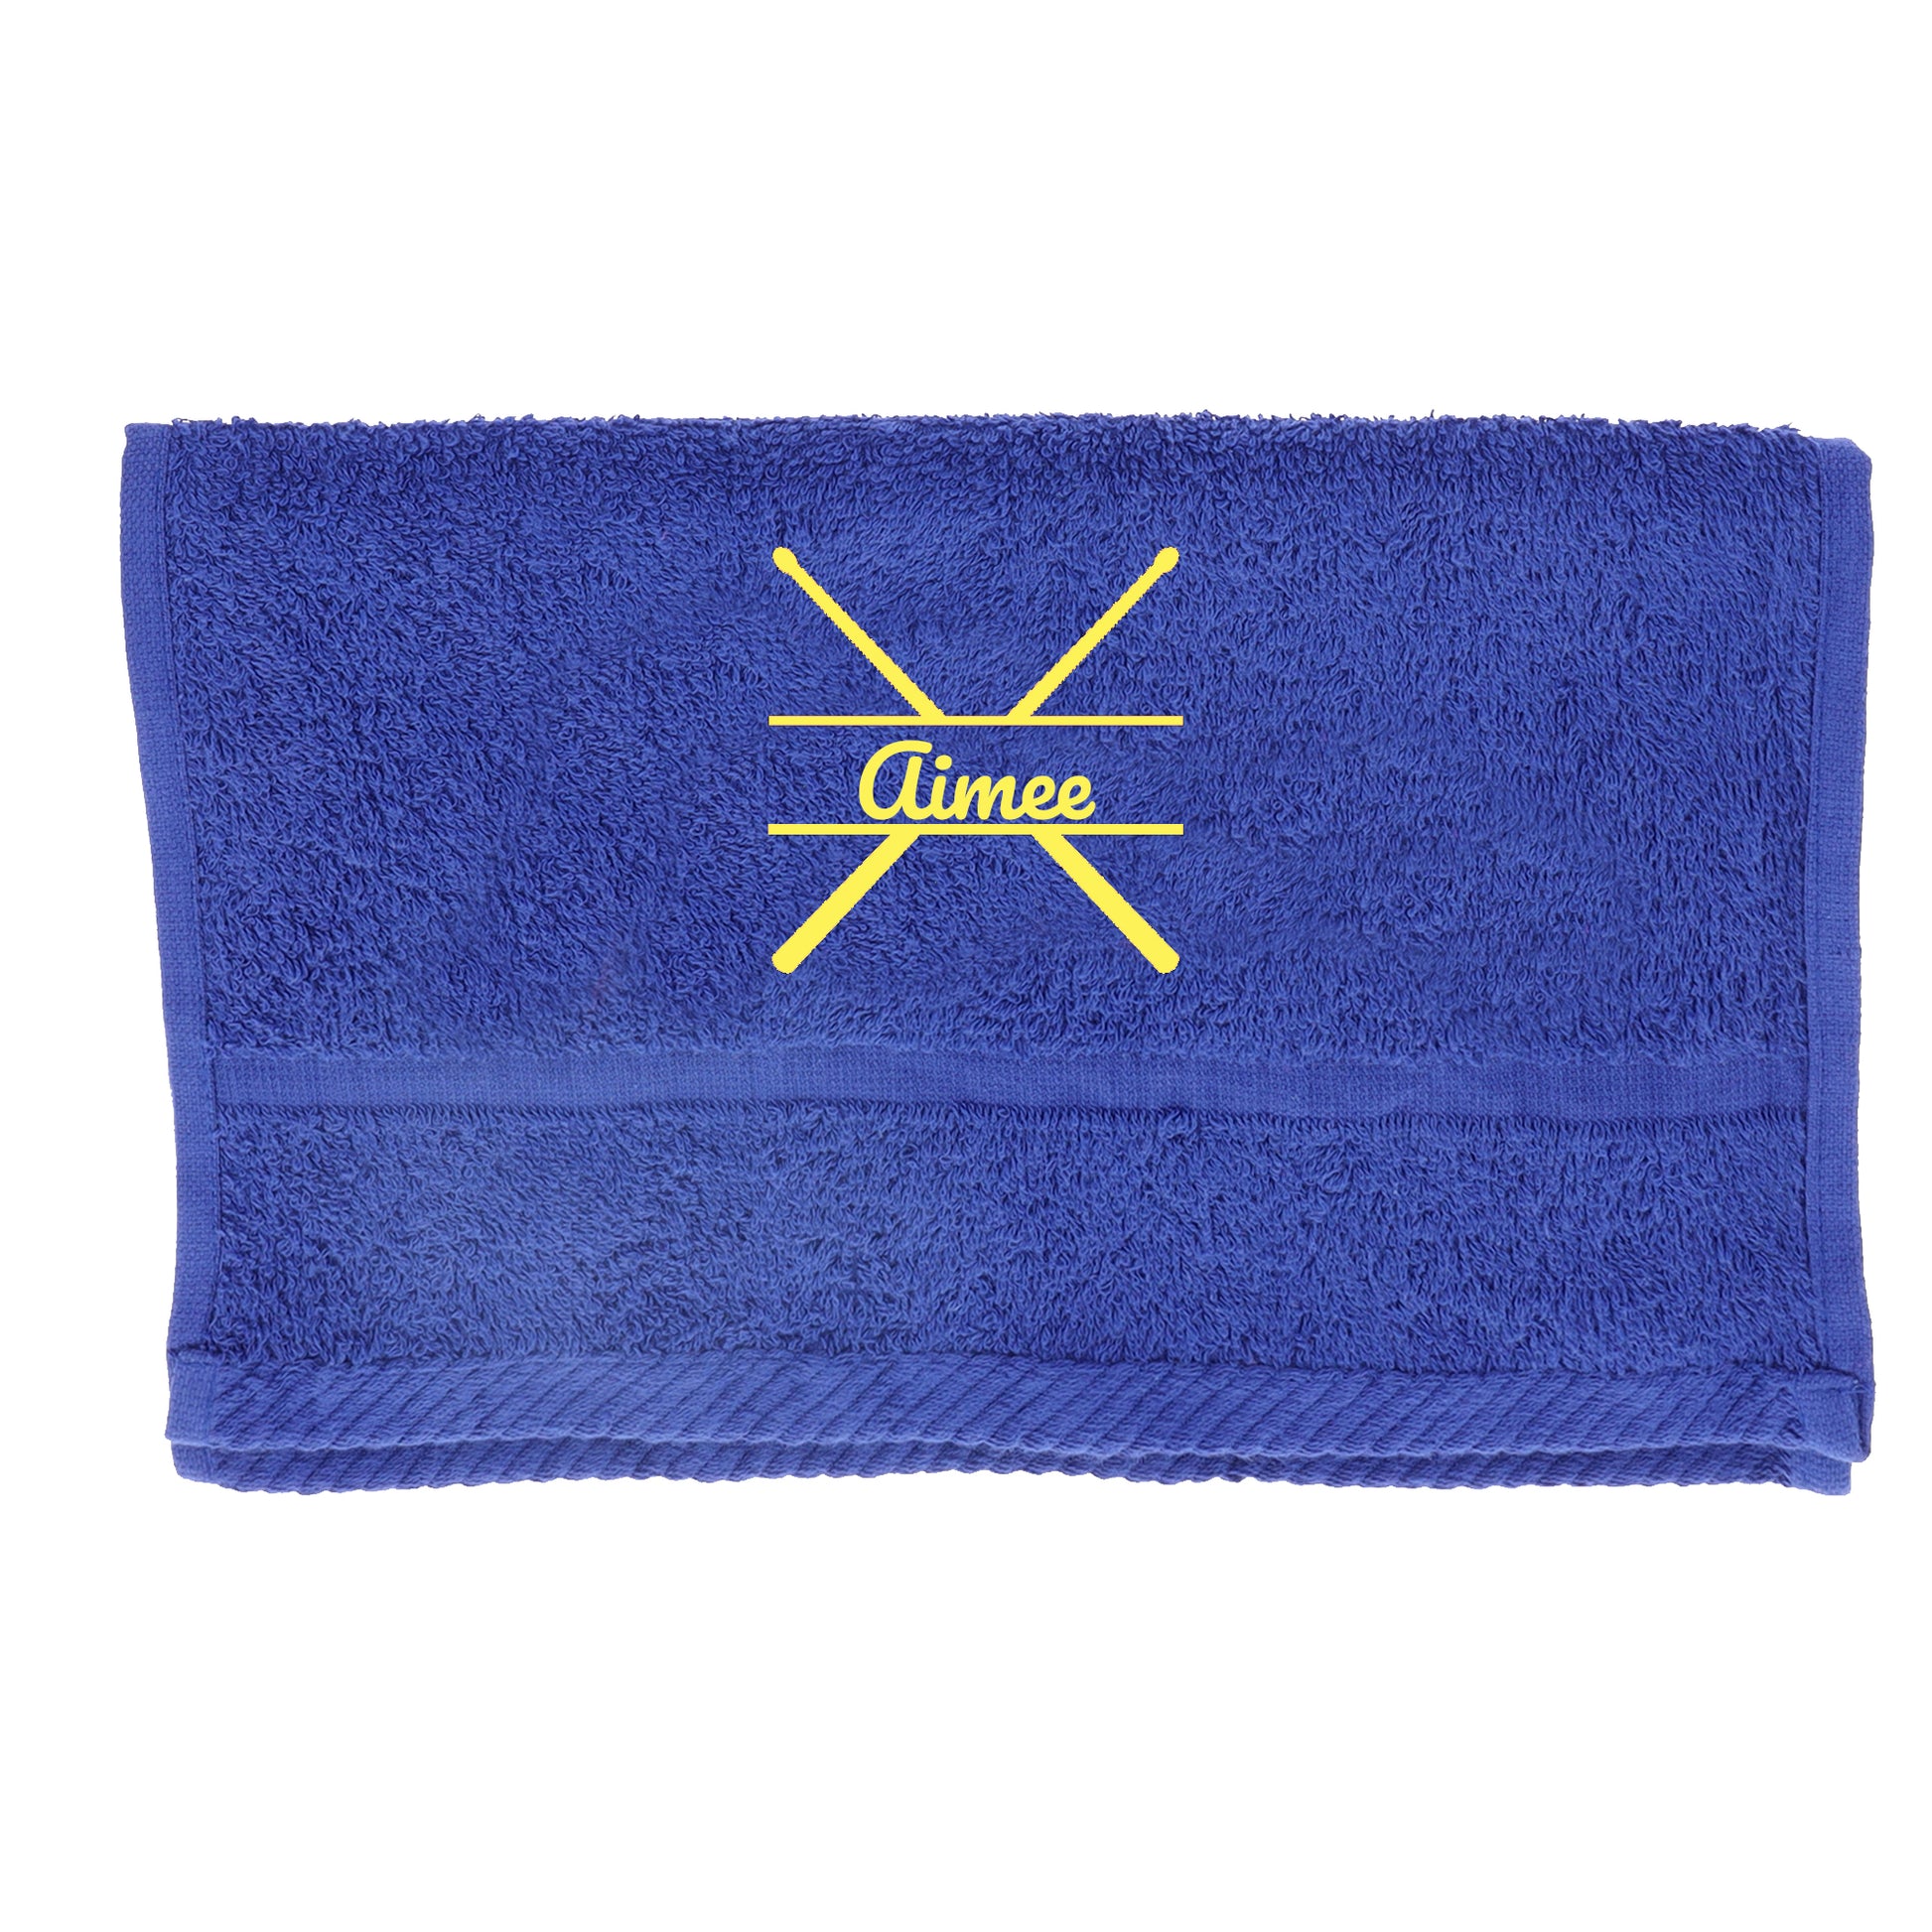 Personalised Embroidered Drummer Towel  - Always Looking Good - Royal Blue  